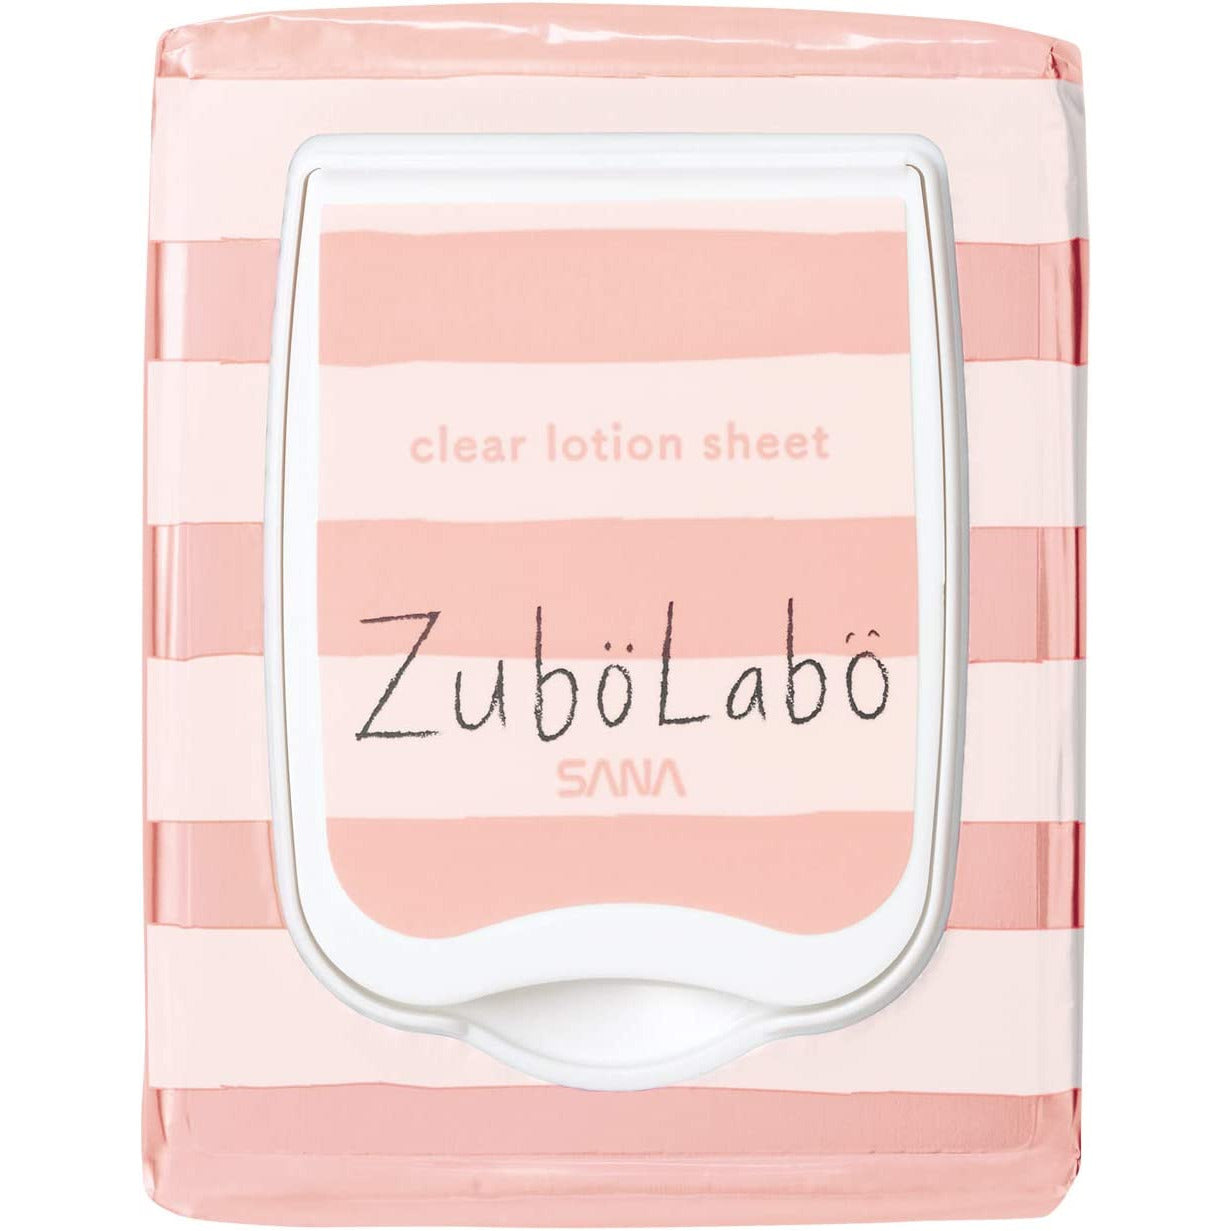 SANA Zuborabo morning wipe lotion sheet (35 pieces)